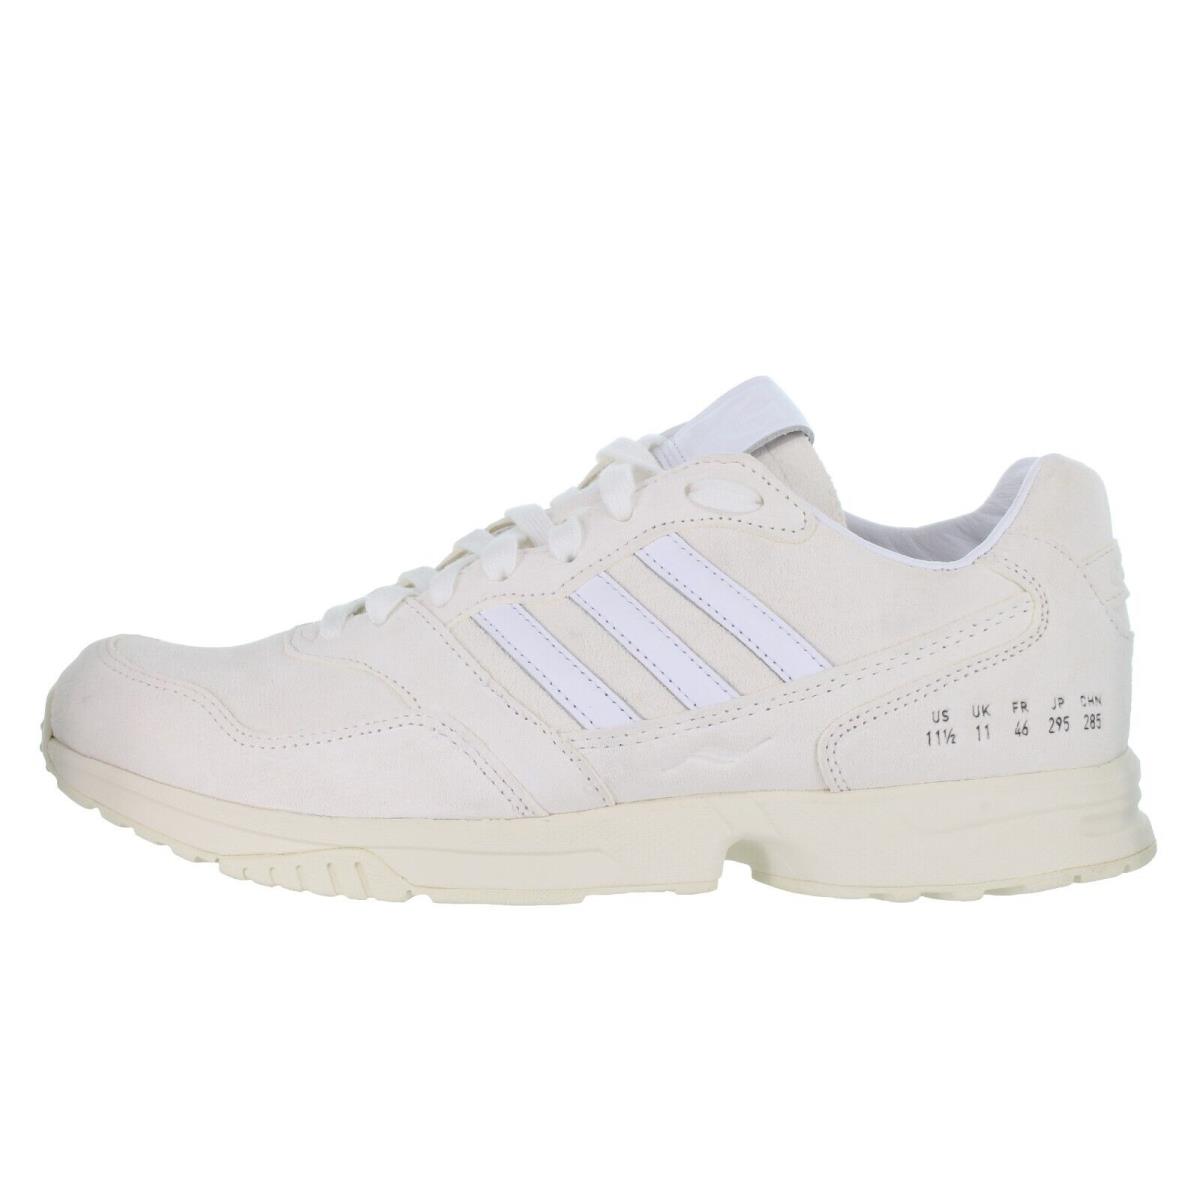 Adidas Men`s Originals ZX 1000 C White Casual Shoes Size 11.5 - 12 - White